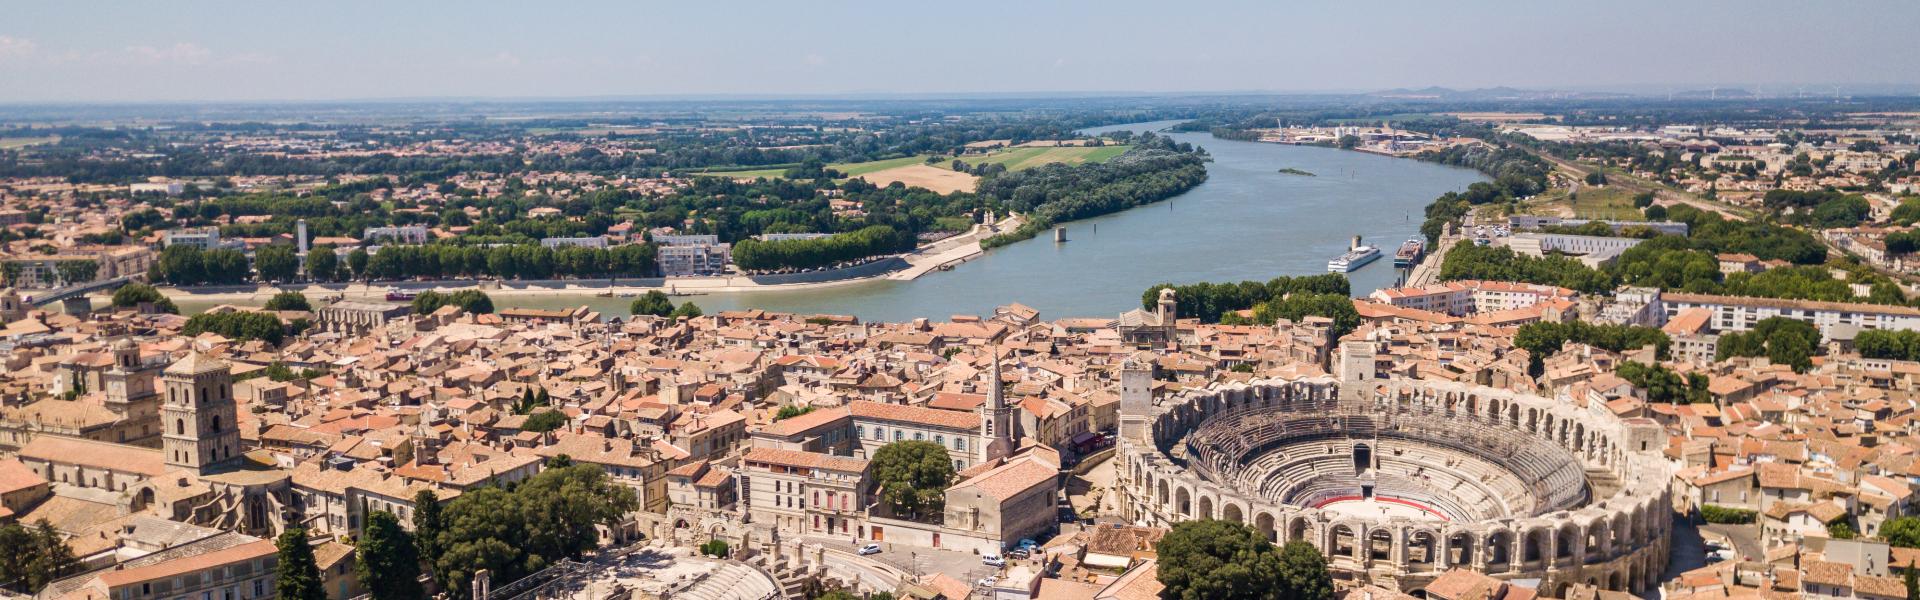 Arles (Provenza) affittare case vacanze - Casamundo